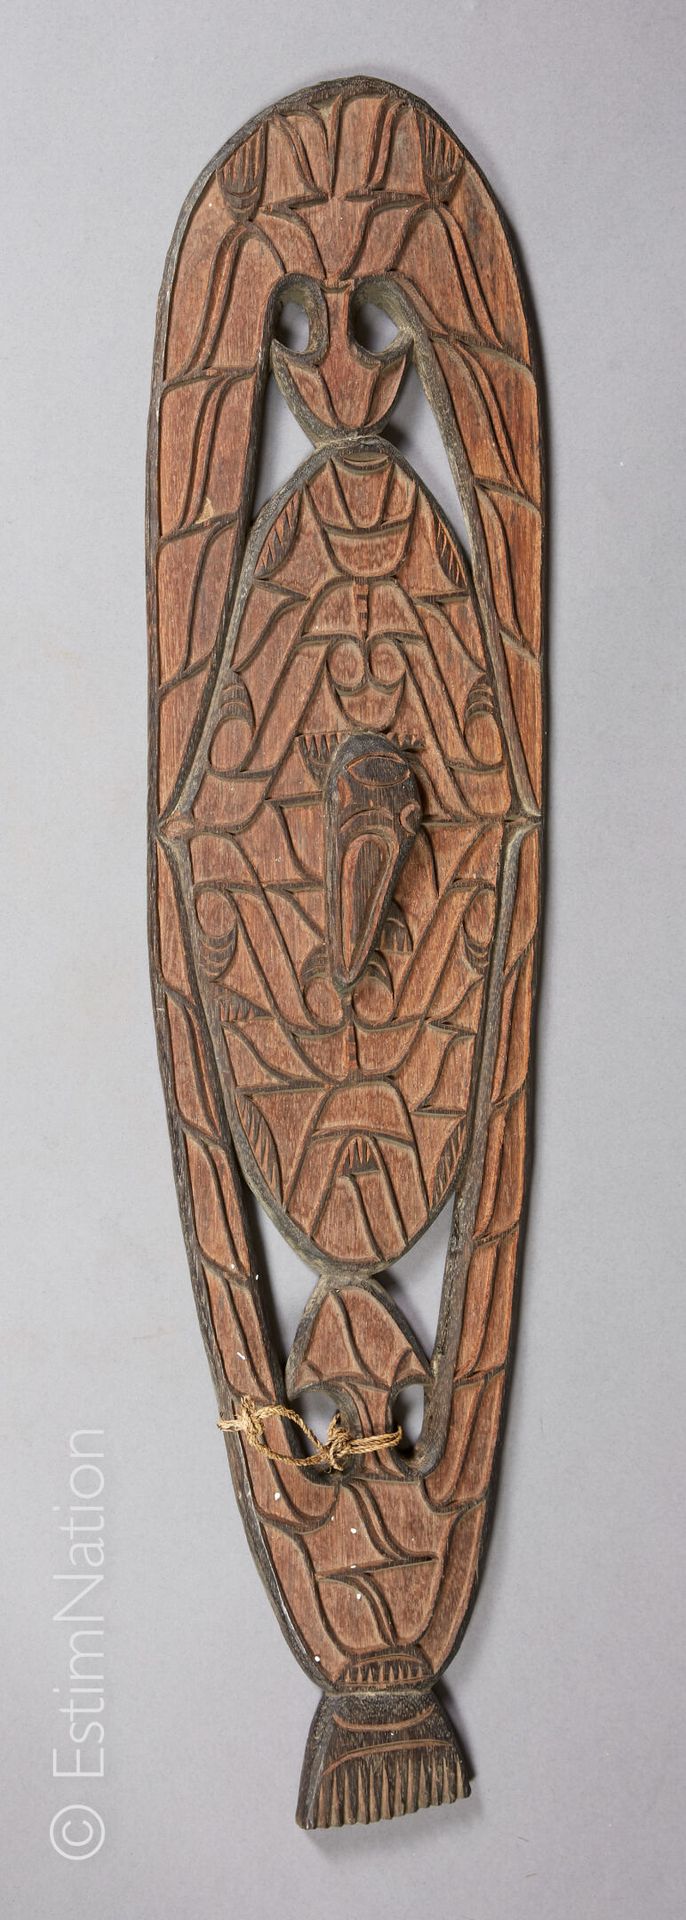 ASMAT - IRIAN JAYA ASMAT - IRIAN JAYA



Tablero votivo de madera tallada y cala&hellip;